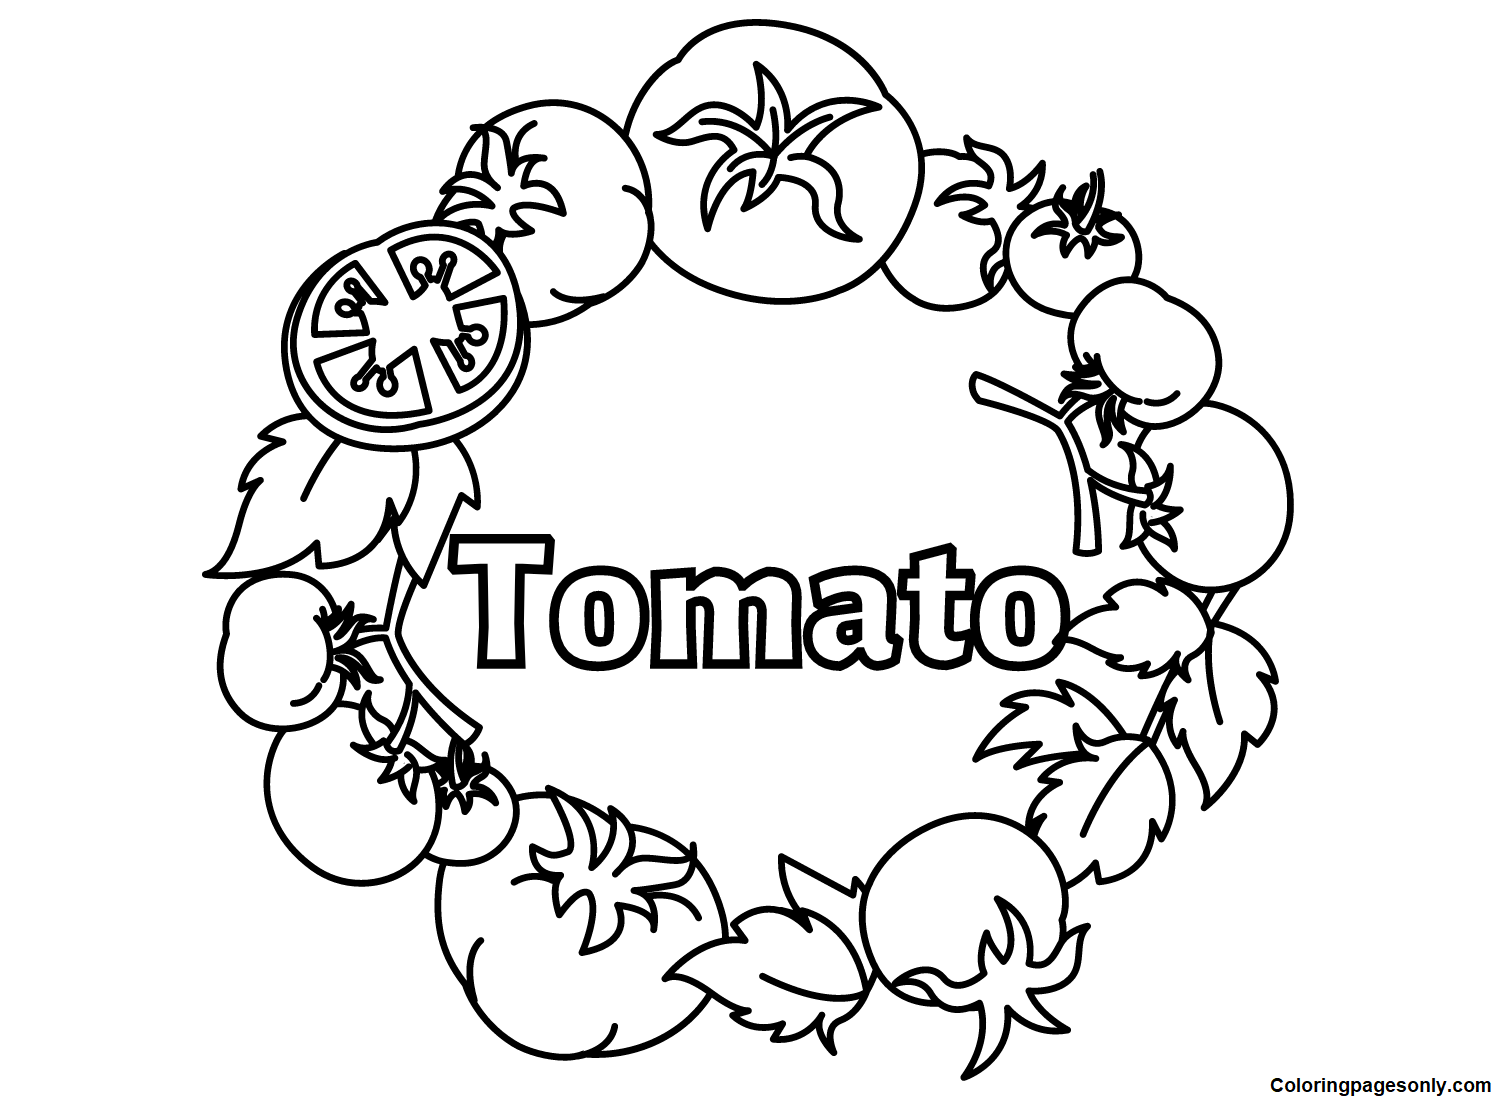 Tomatenbilder von Tomato